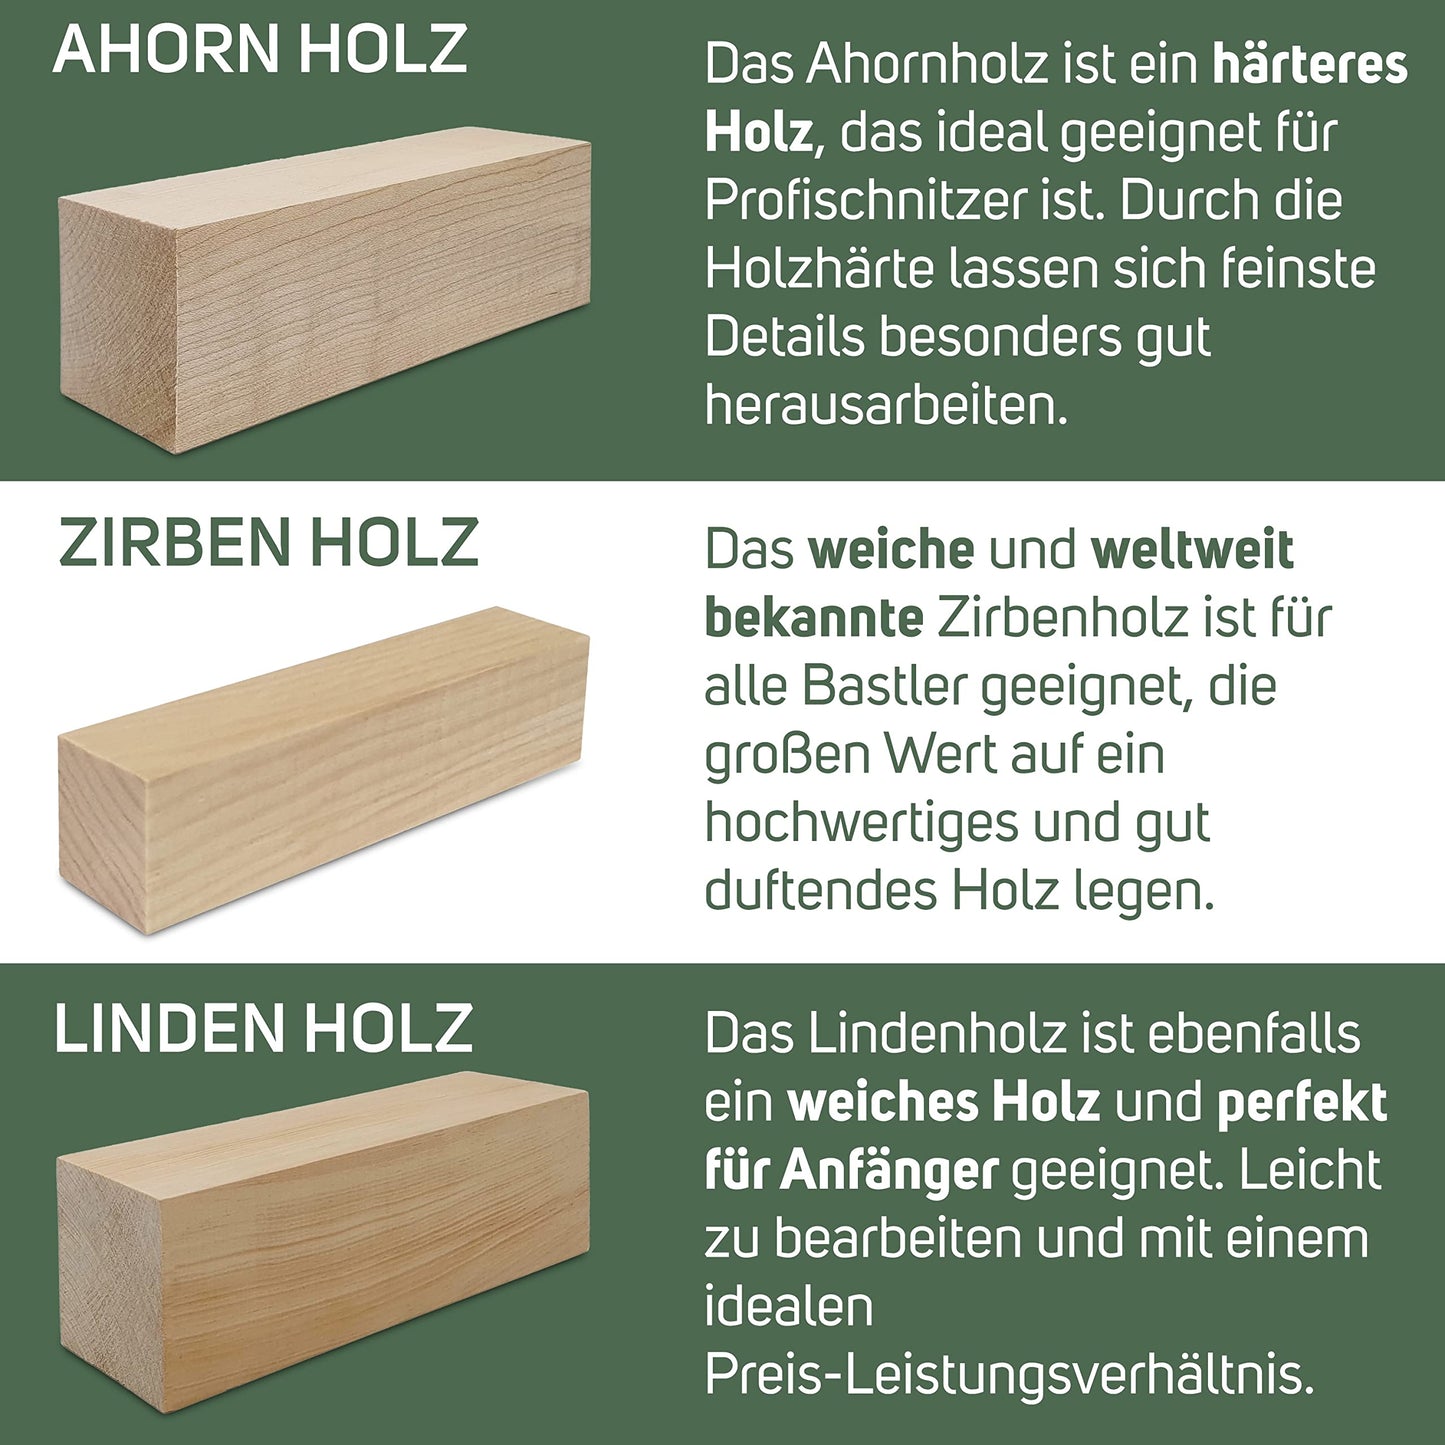 Zirbenholz Block zum drechseln und schnitzen Drechselholz Rohlinge Schnitzholz aus Zirbe - Drechselholz Rohlinge aus Zirbenholz zugeschnitten und gehobelt (30 x 13 x 7 cm)